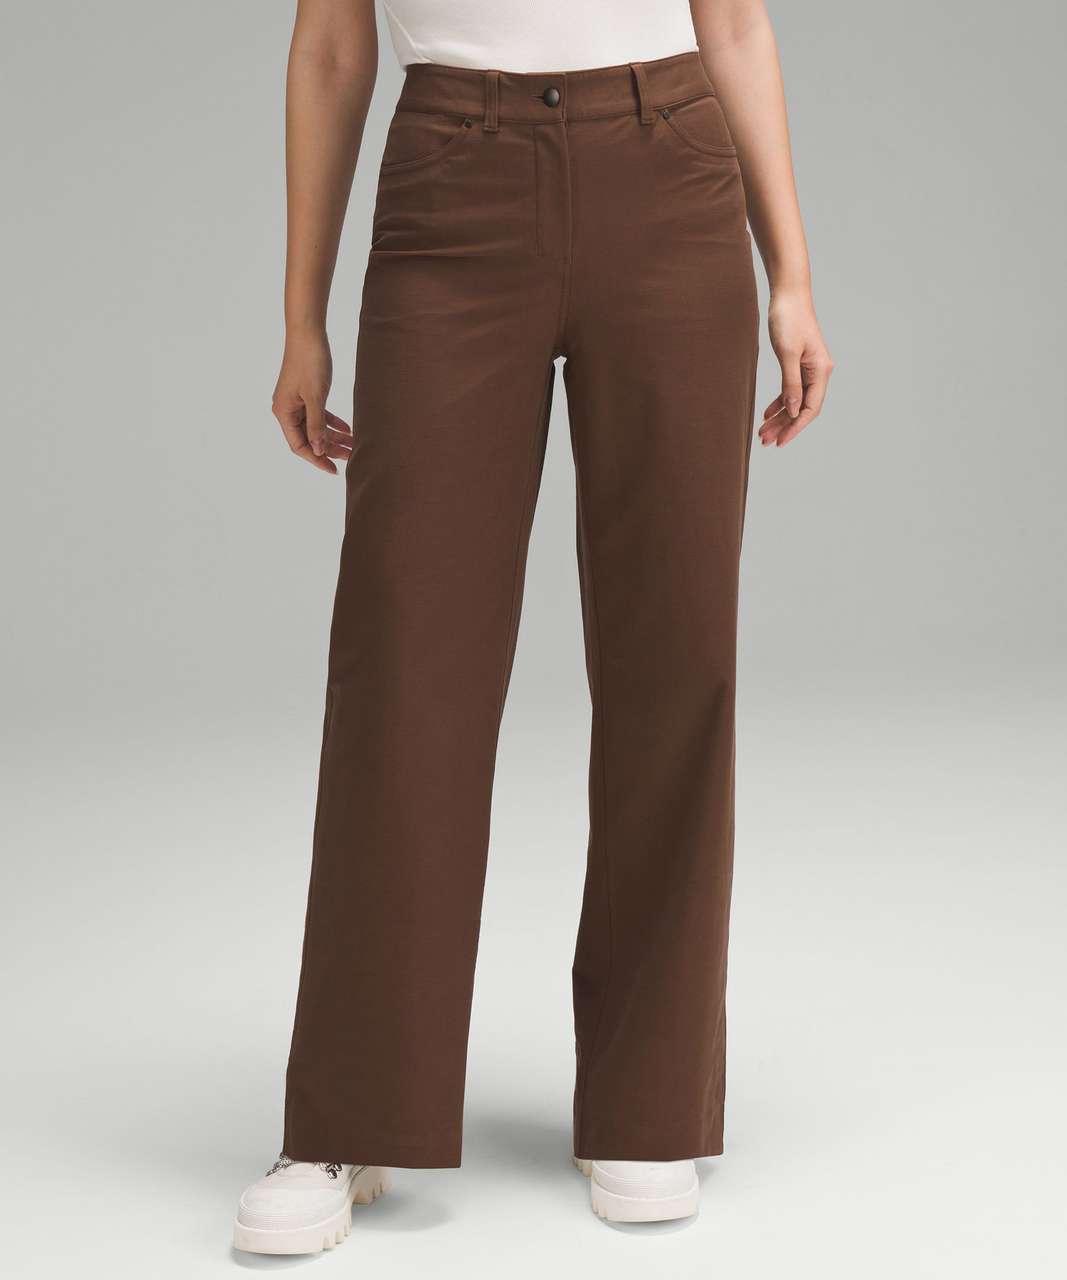 Lululemon City Sleek 5 Pocket 7/8 Pant  7/8th pants, Clothes design, Khaki  color